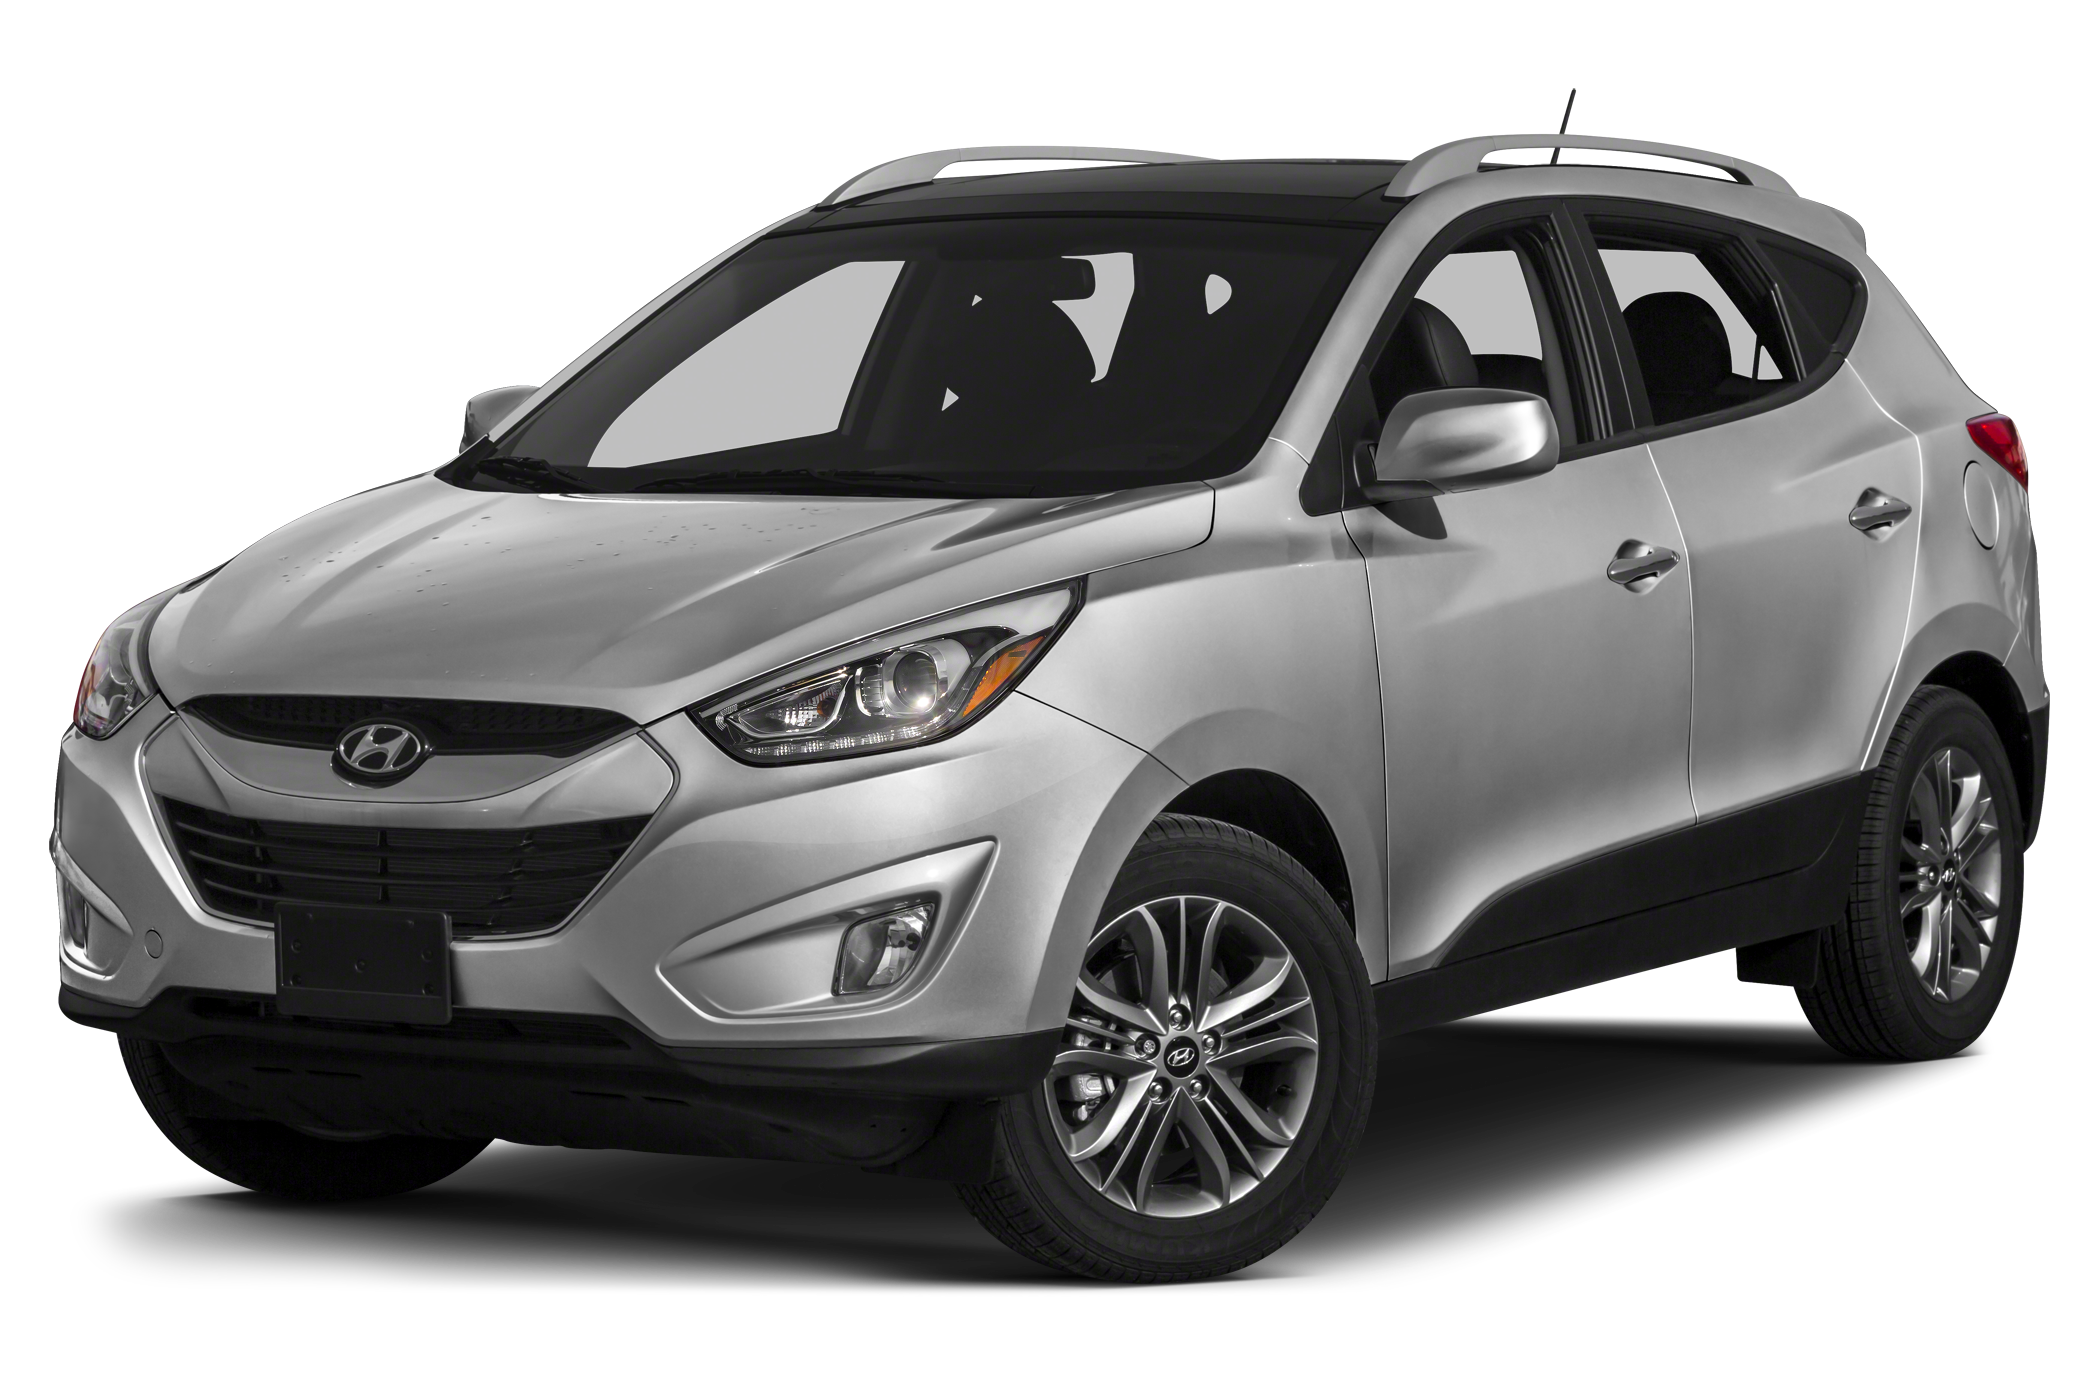 2014 Hyundai Tucson - View Specs, Prices & Photos - WHEELS.ca